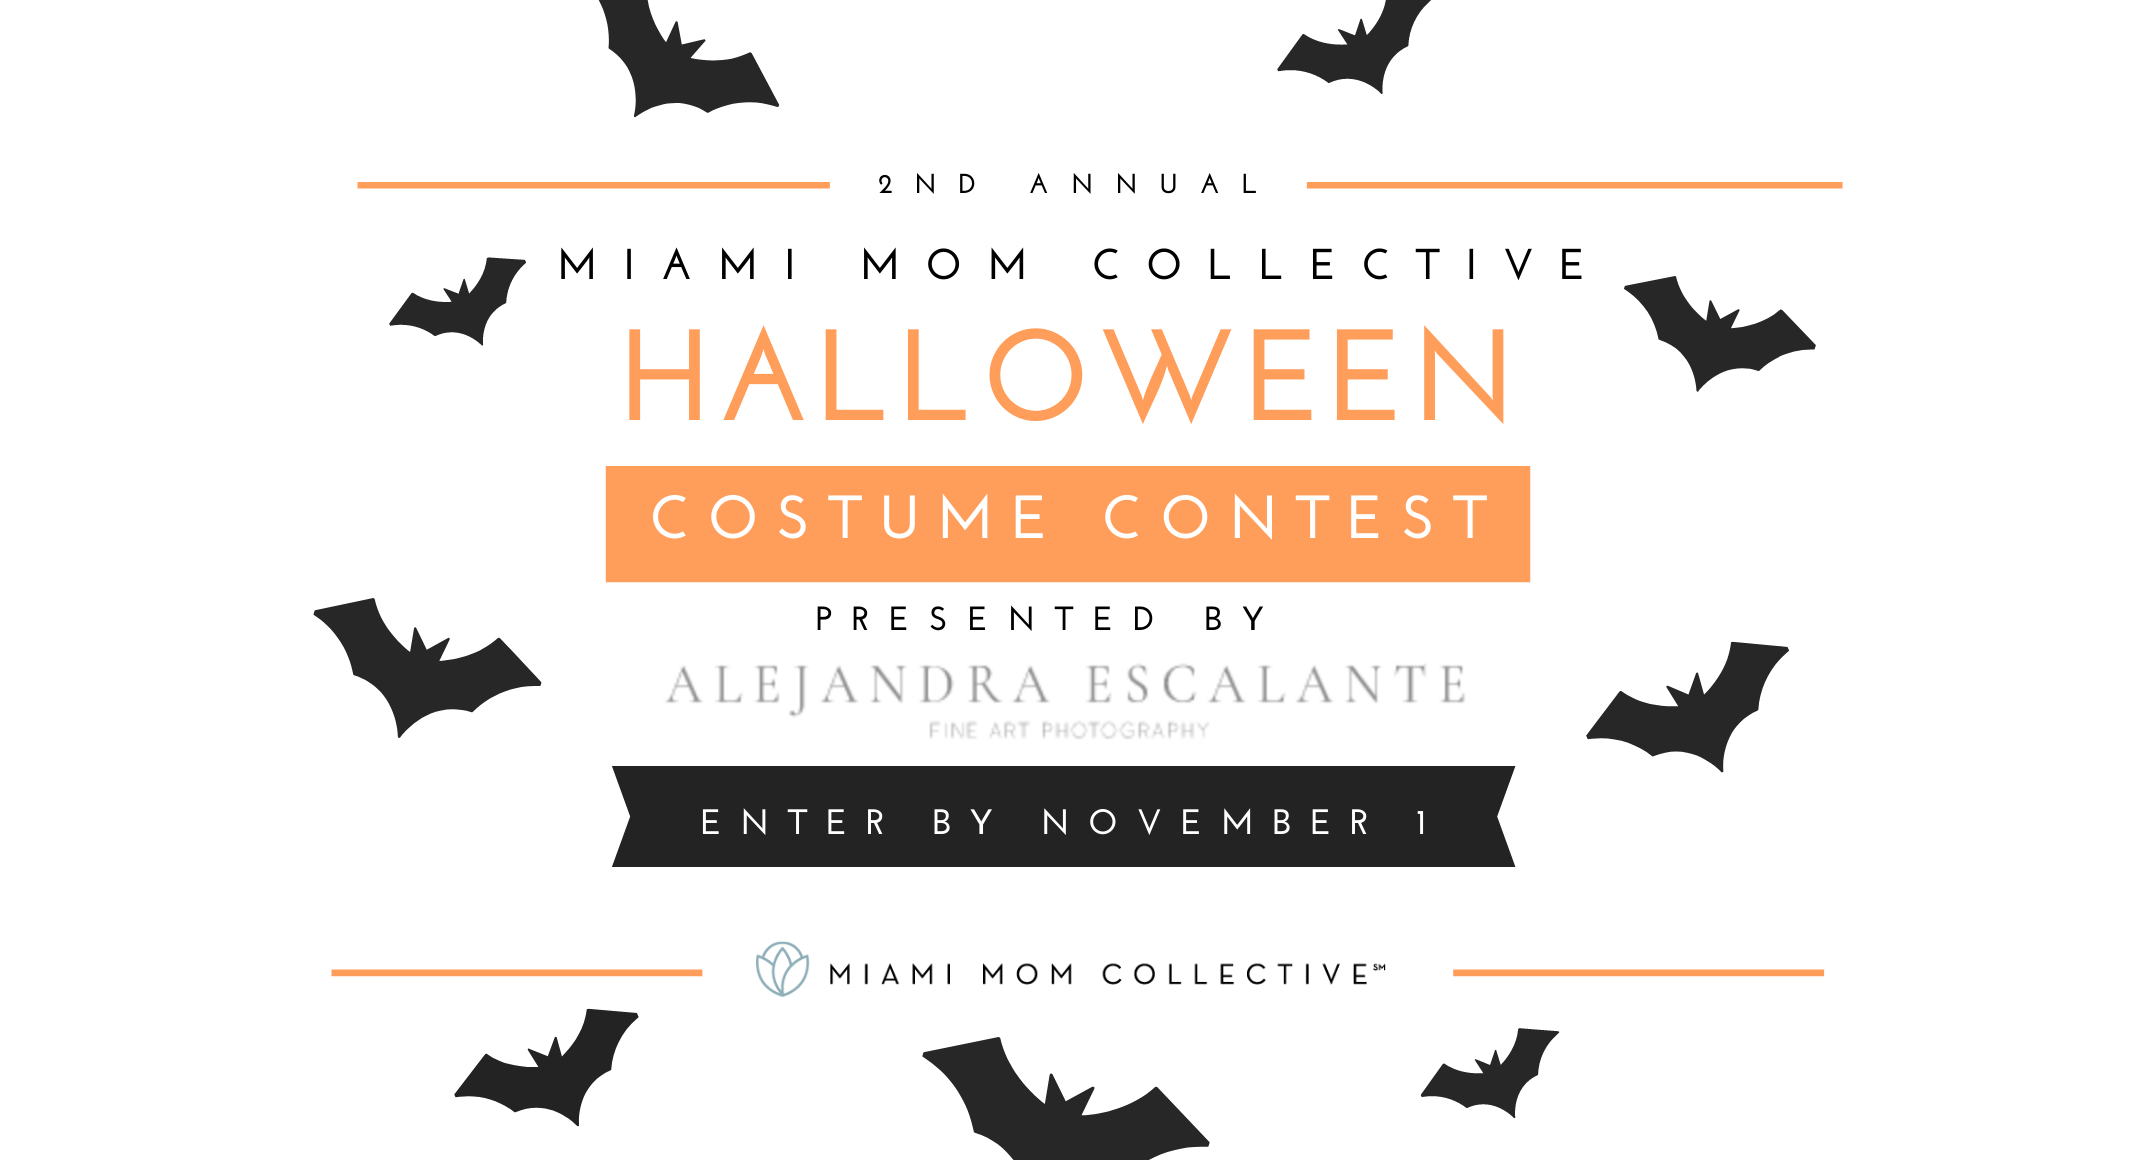 2nd Annual Miami Mom Collective Halloween Costume Contest